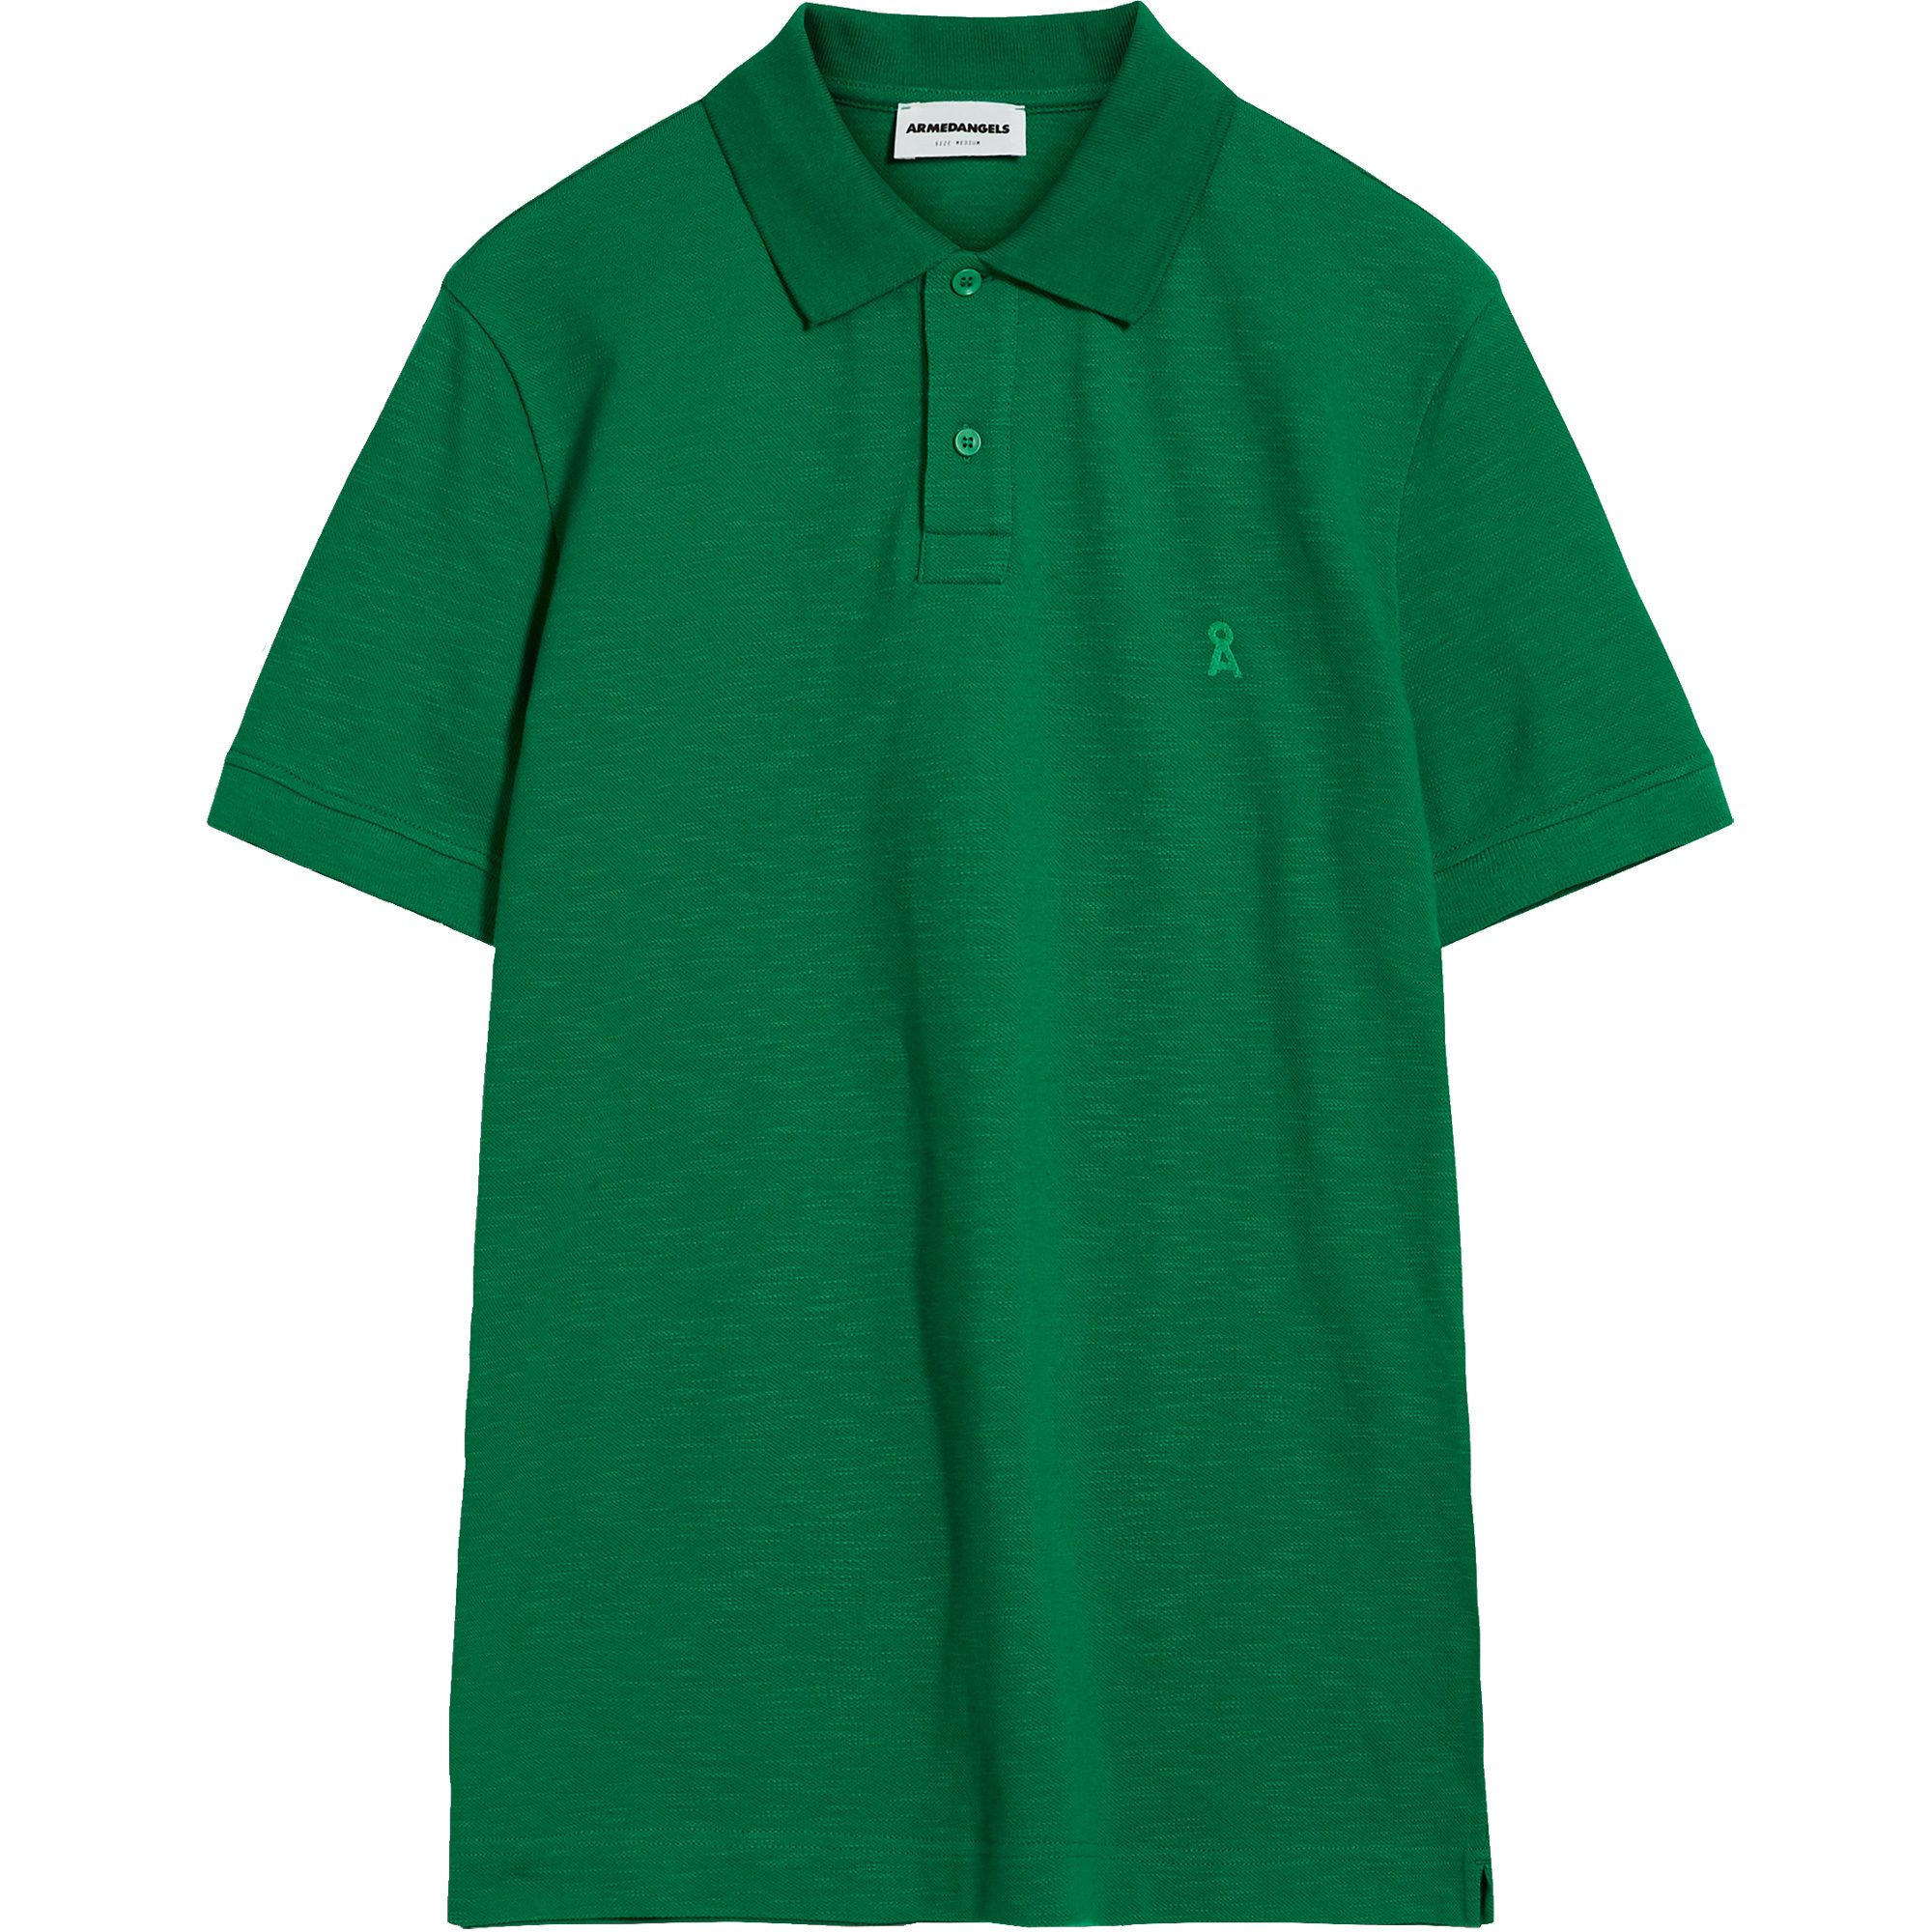 Armedangels - Fibraas Polo Shirt kaufen Sport green Shop Bittl flash im Herren